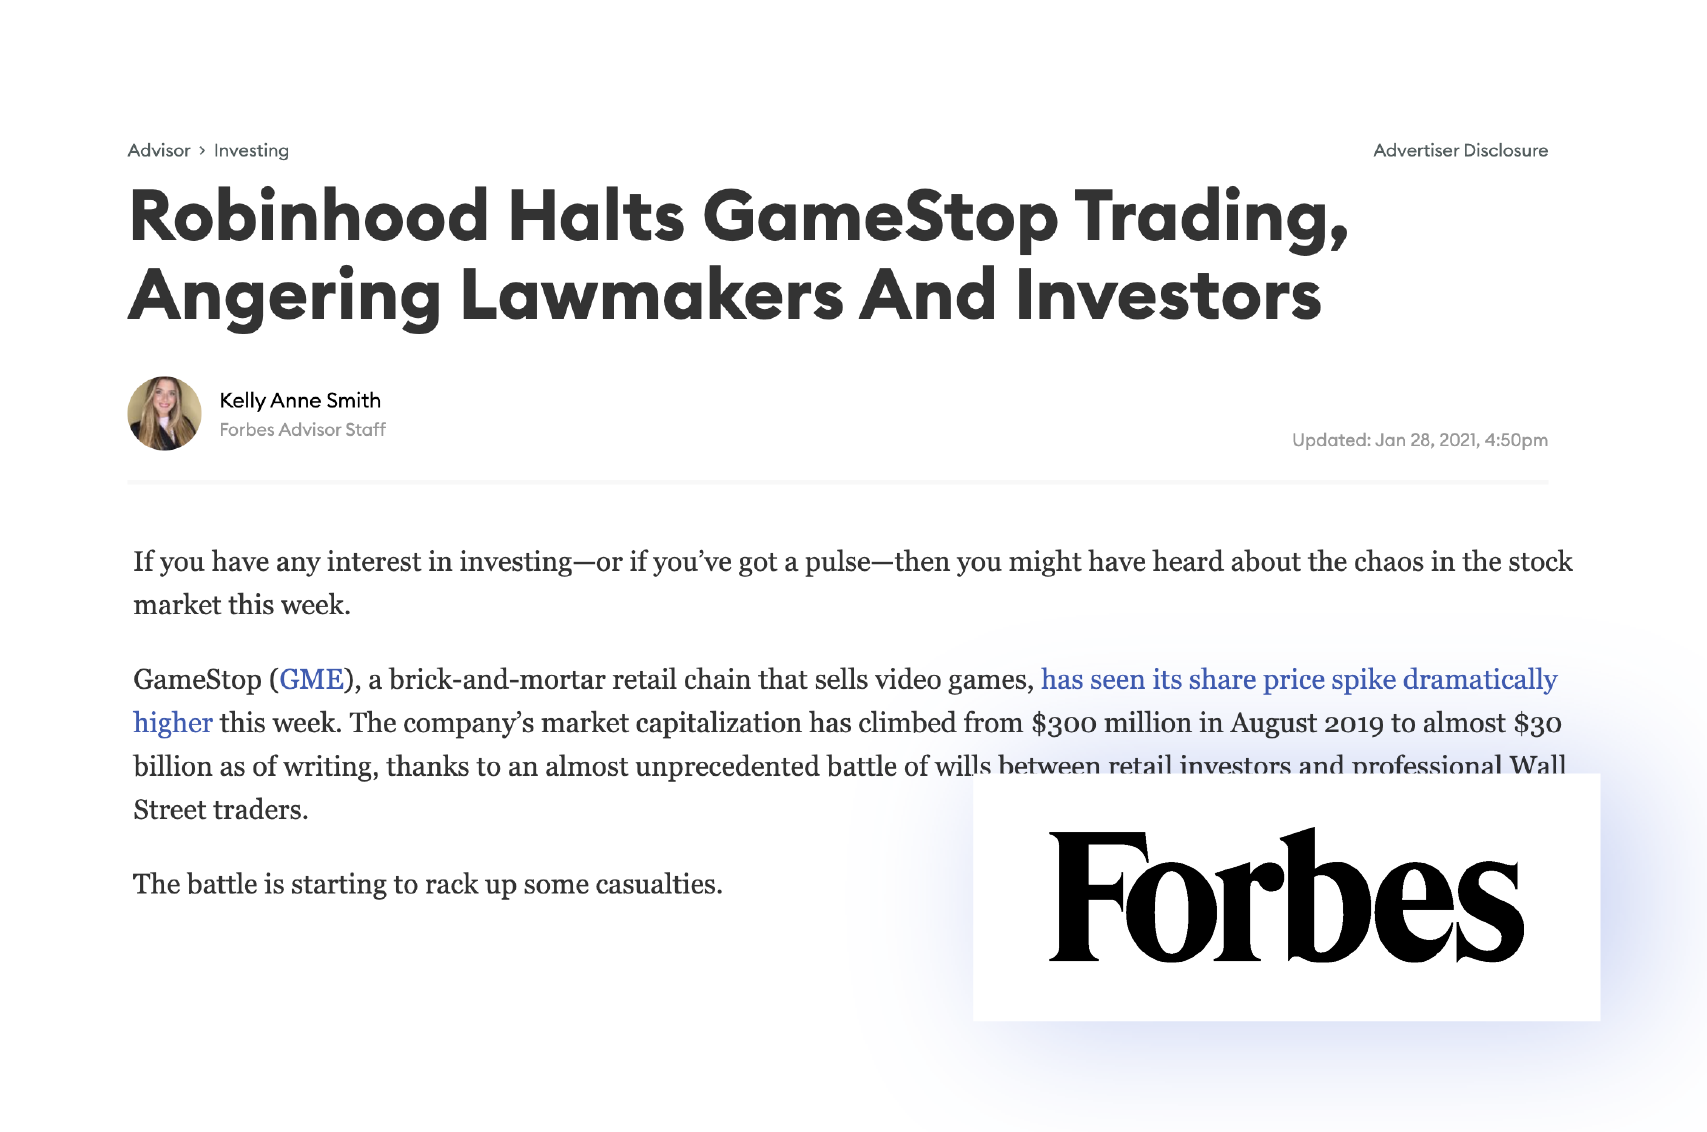 Robinhood trading halt of GME stock